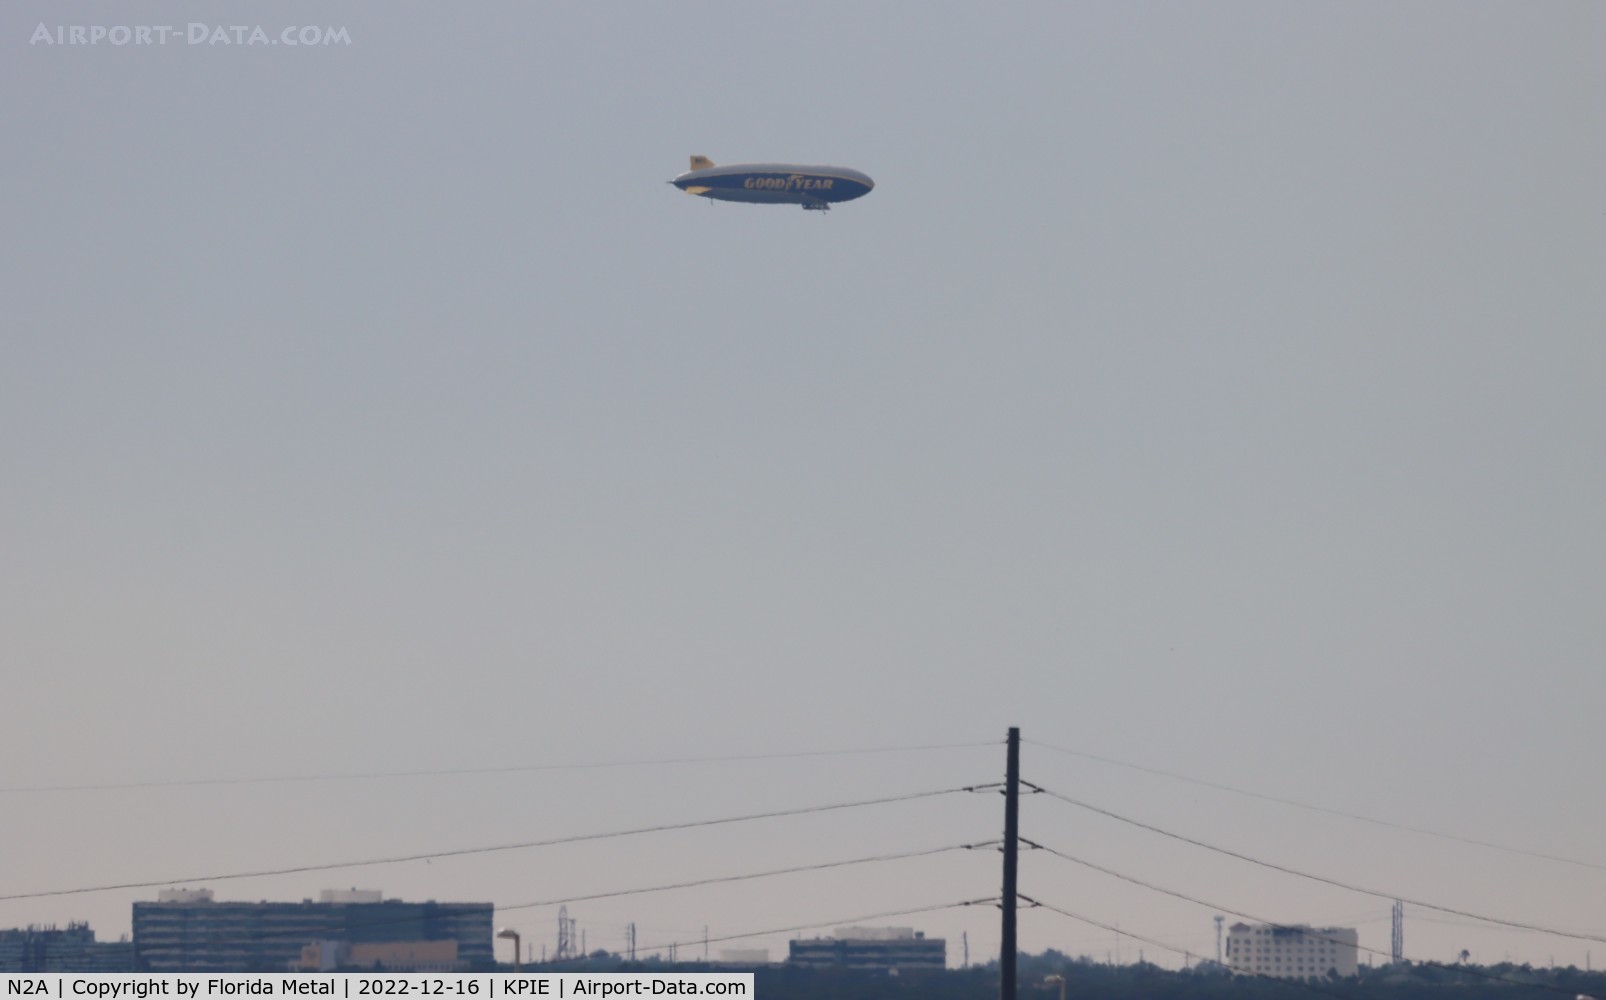 N2A, 2016 Zeppelin LZ N07-101 C/N 007, Taken from Tampa Airport - seen flying over PIE